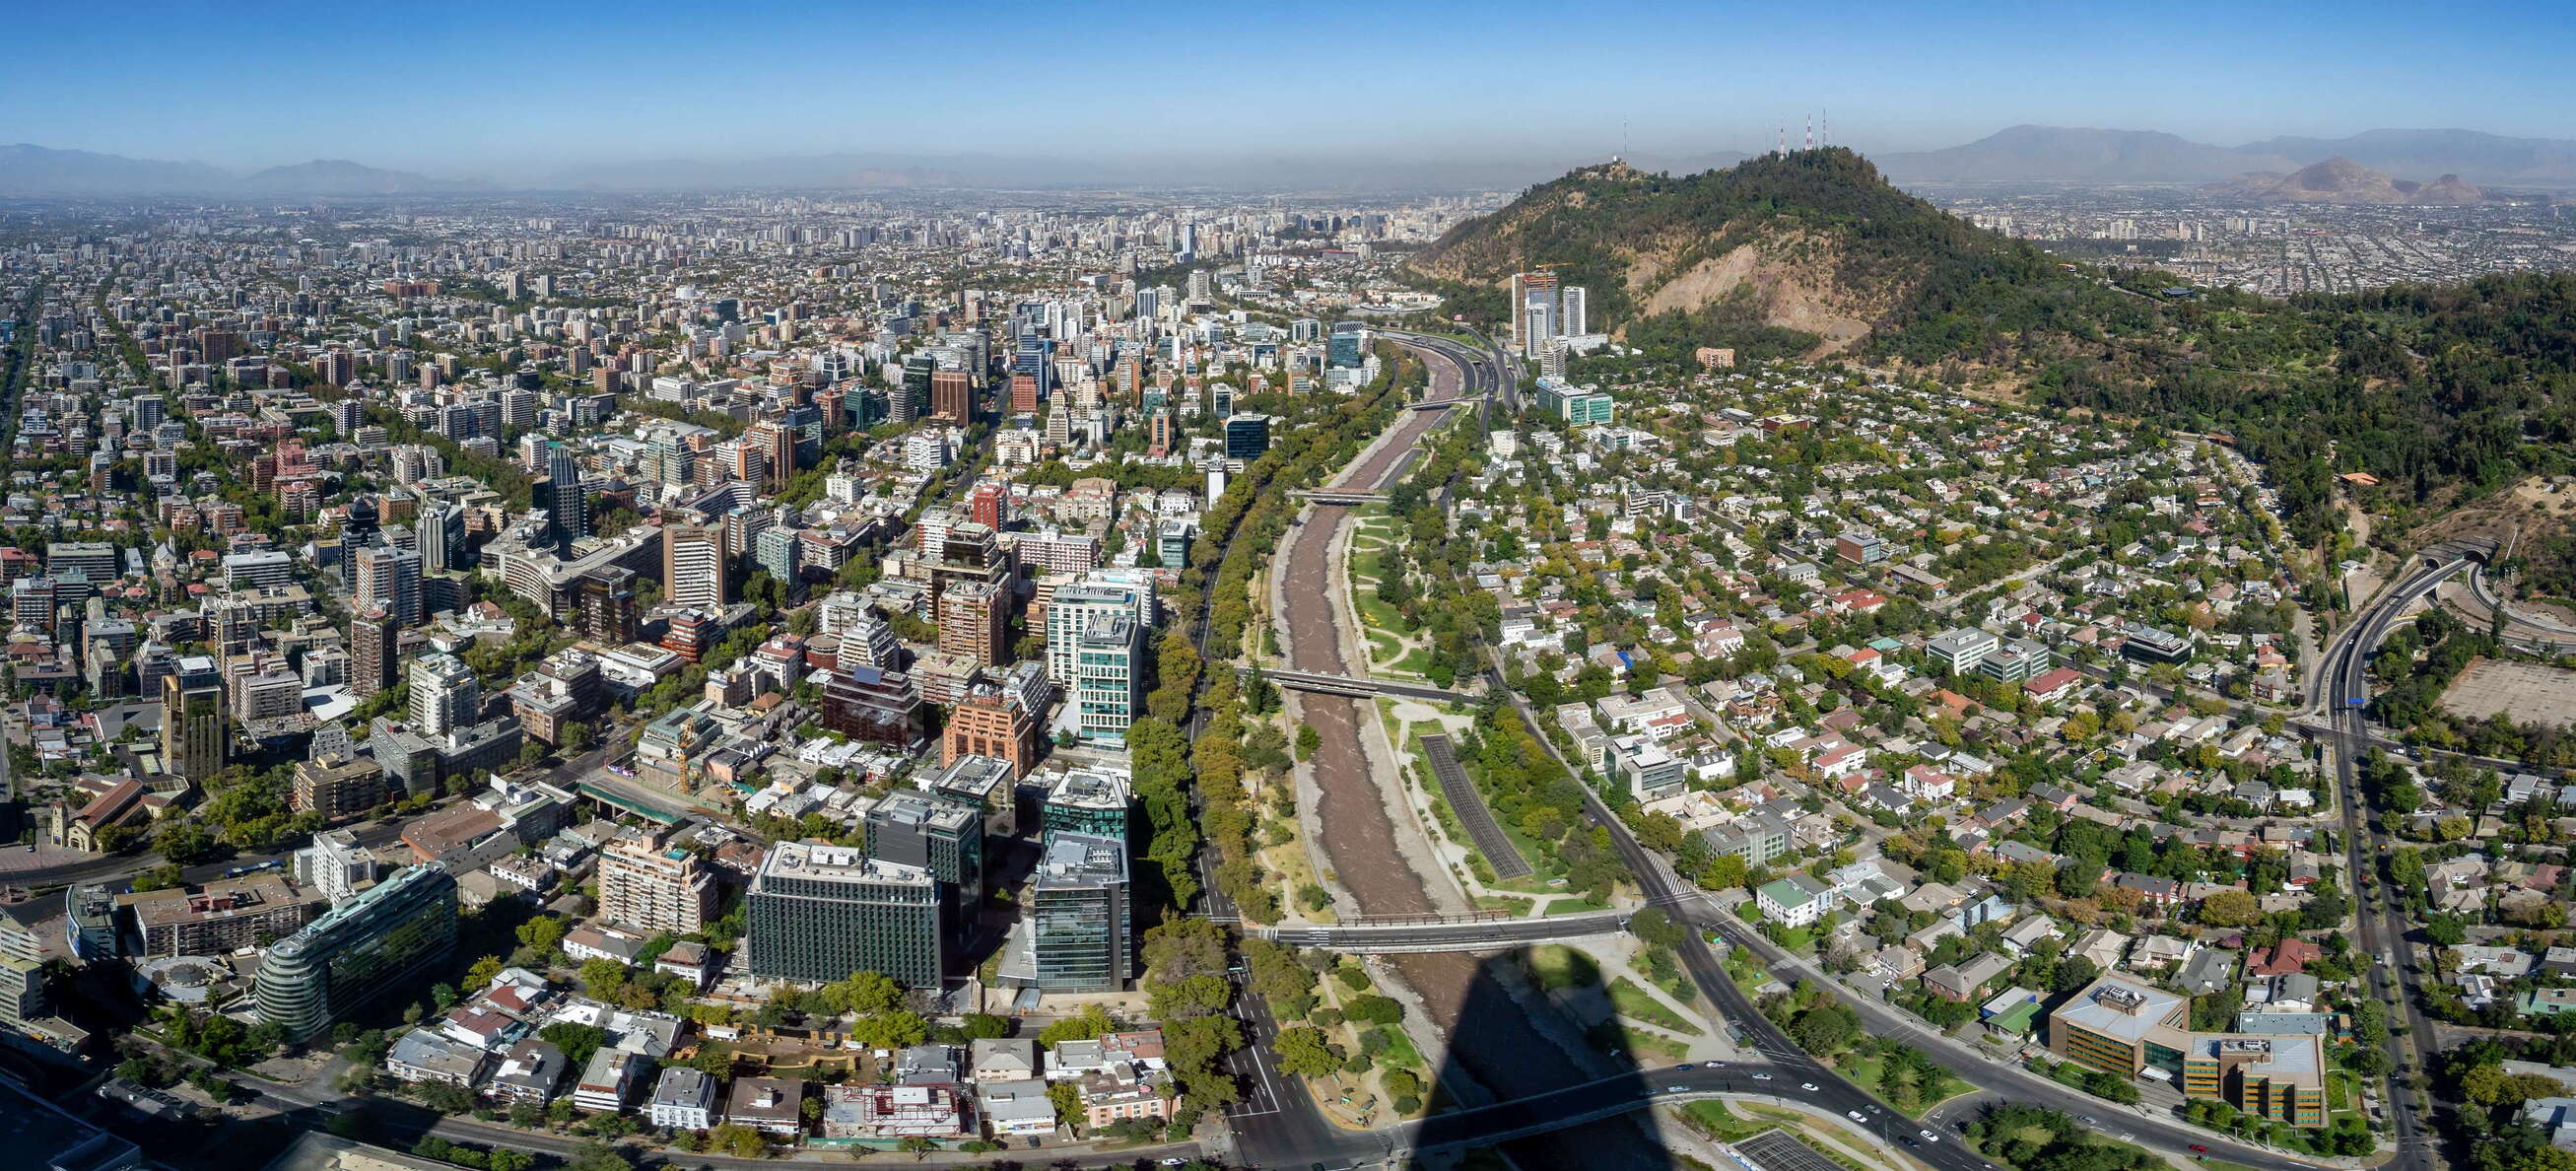 Santiago de Chile | Providencia and Cerro San Cristóbal